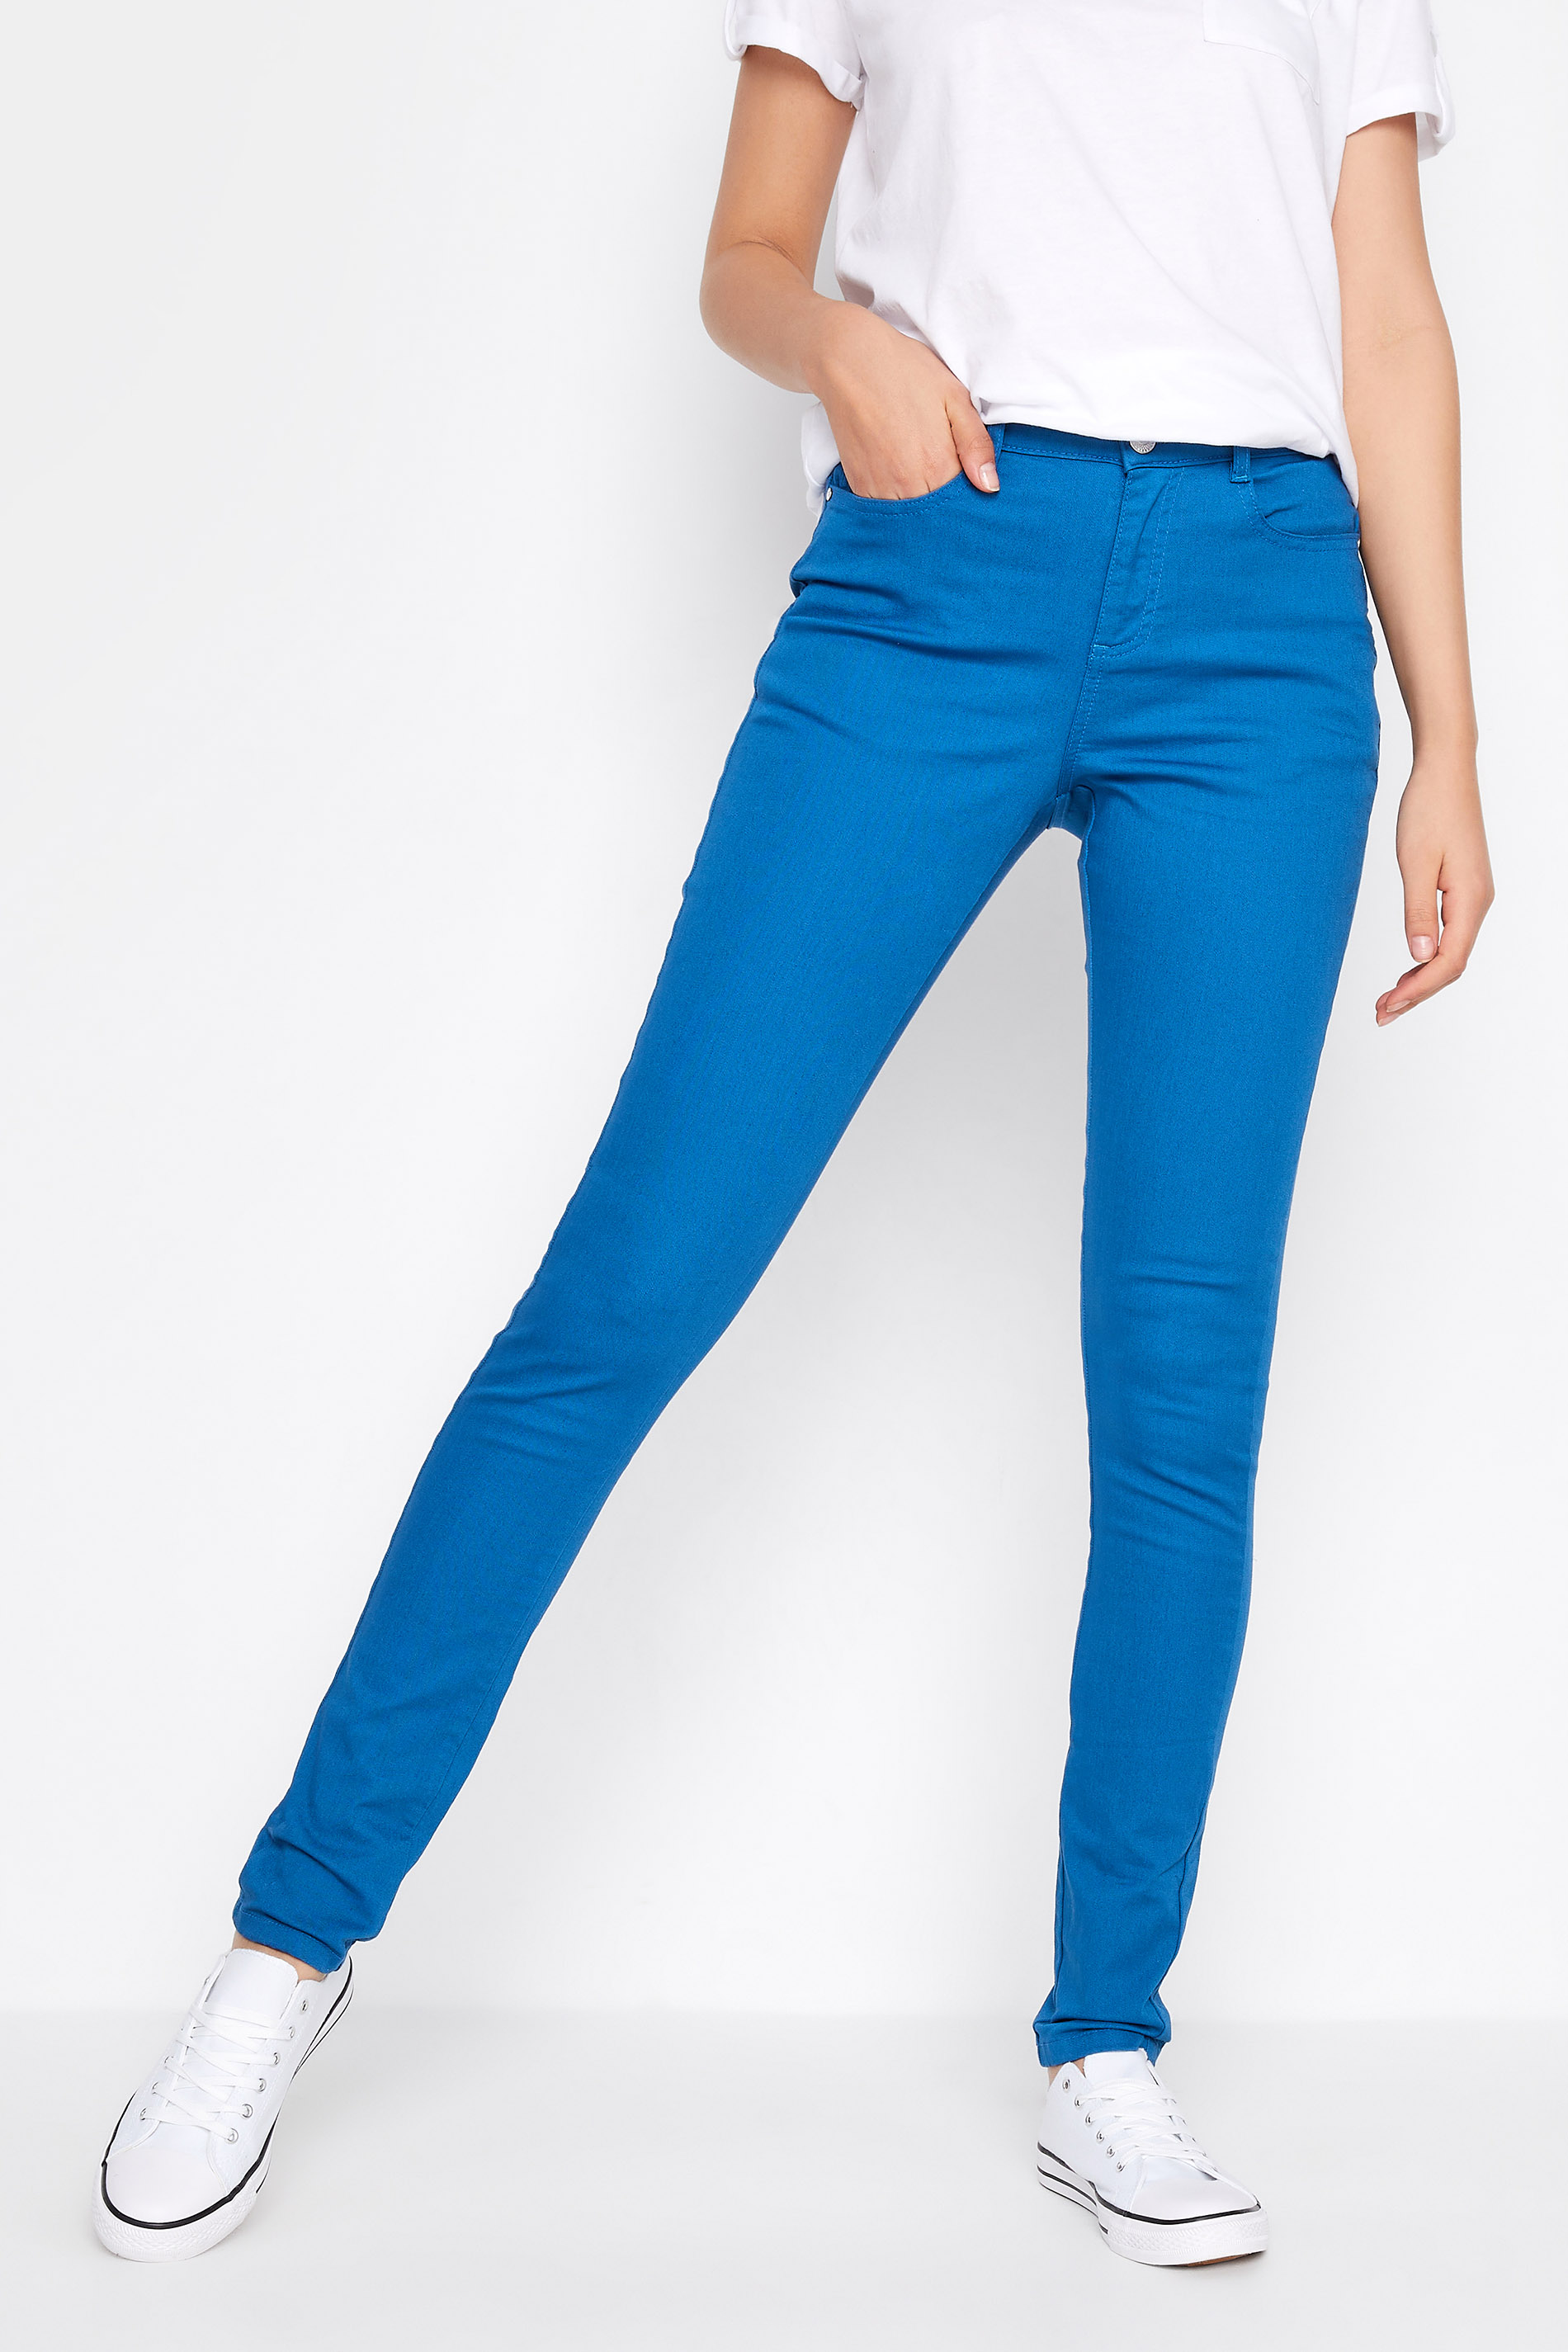 LTS Tall Cobalt Blue AVA Skinny Jeans_A.jpg